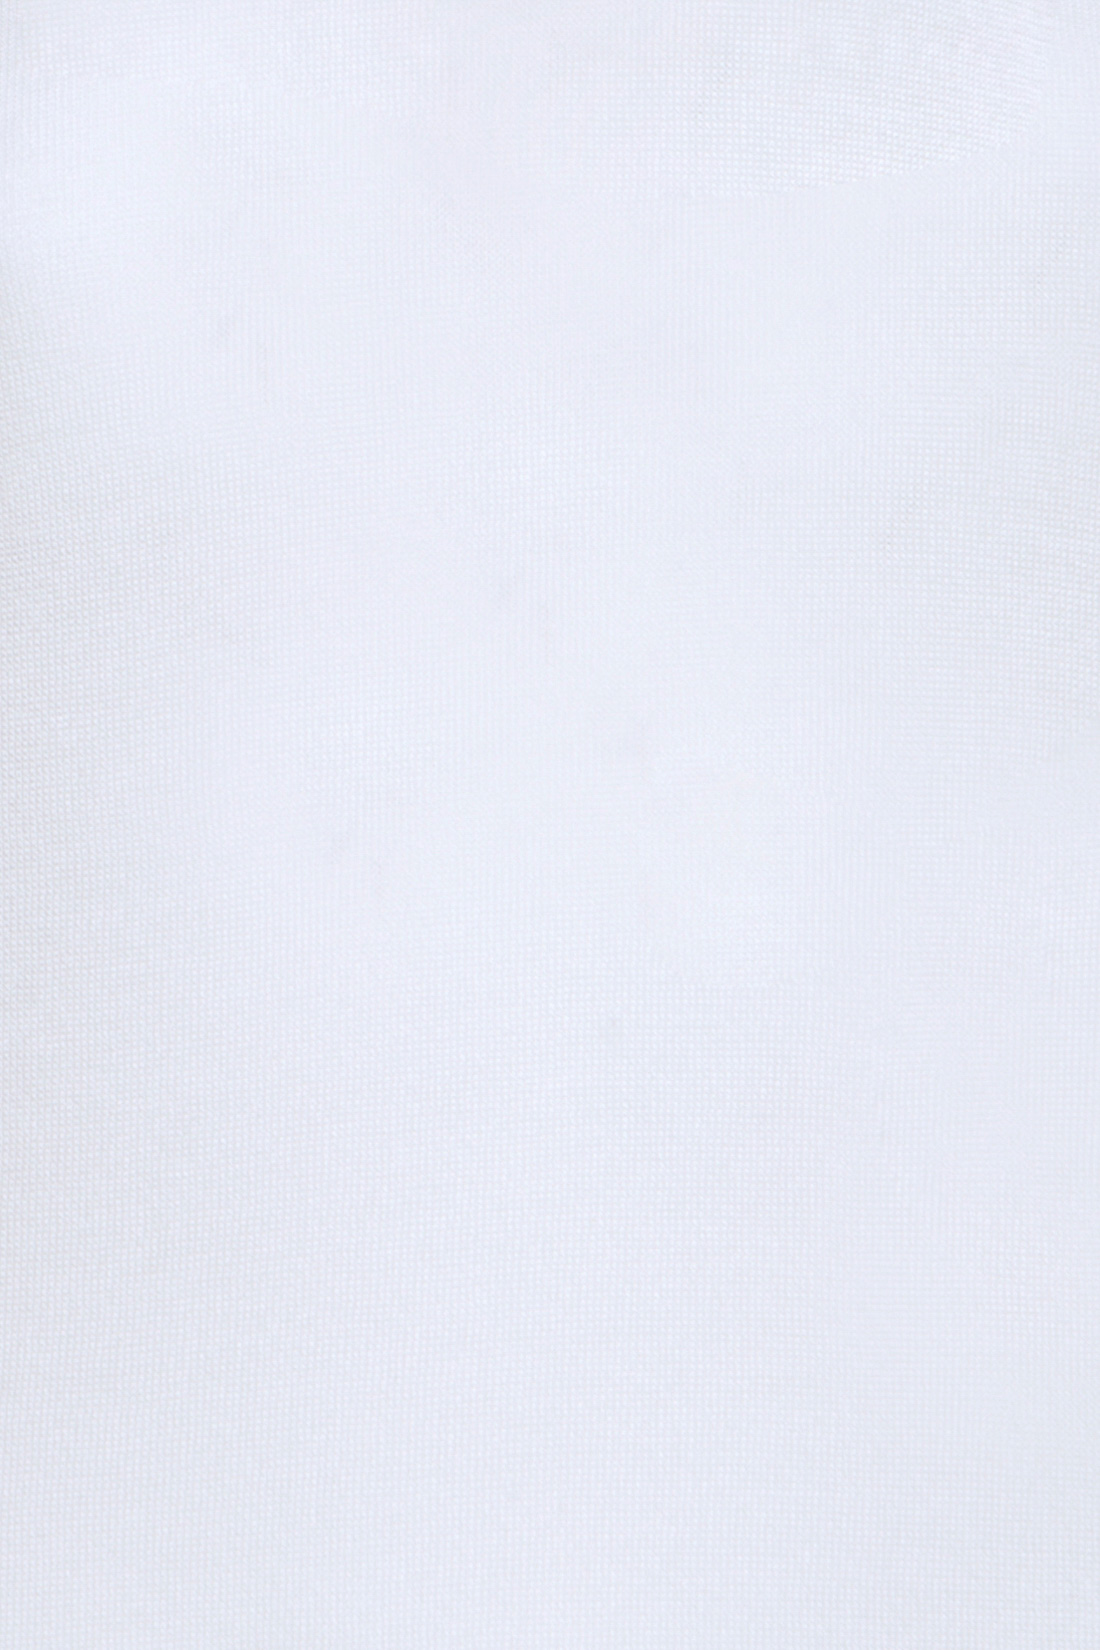 Пуловер с ажурными рукавами (арт. baon B137007), размер XS, цвет белый Пуловер с ажурными рукавами (арт. baon B137007) - фото 3